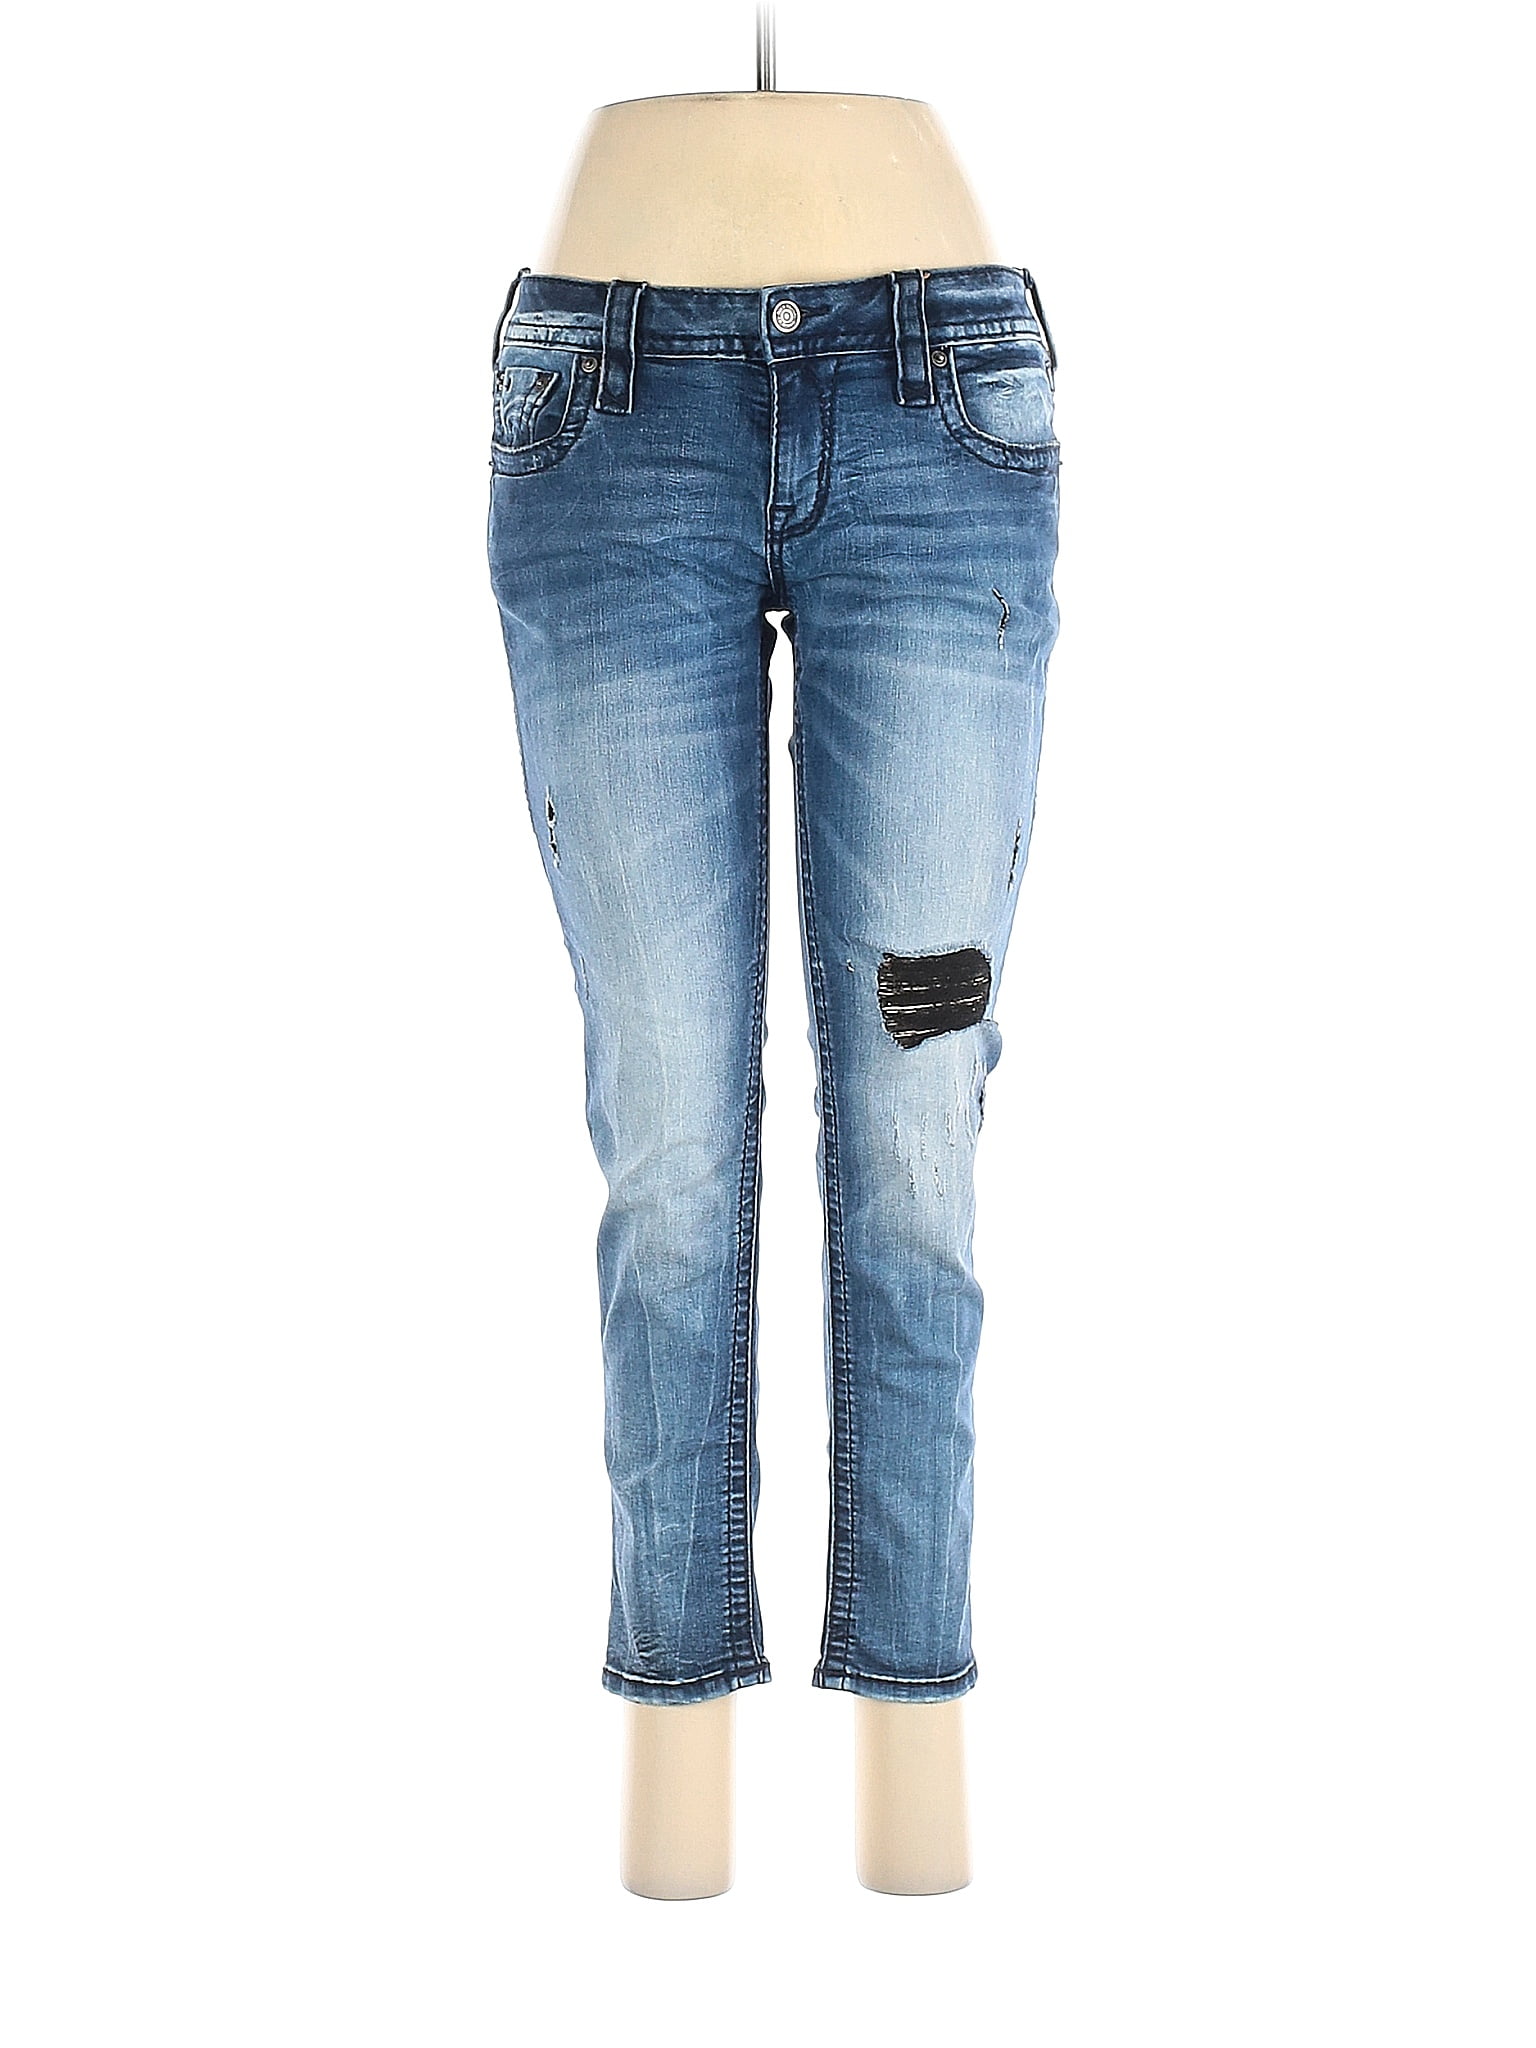 Rock Revival Blue Jeans 29 Waist - 66% off | thredUP